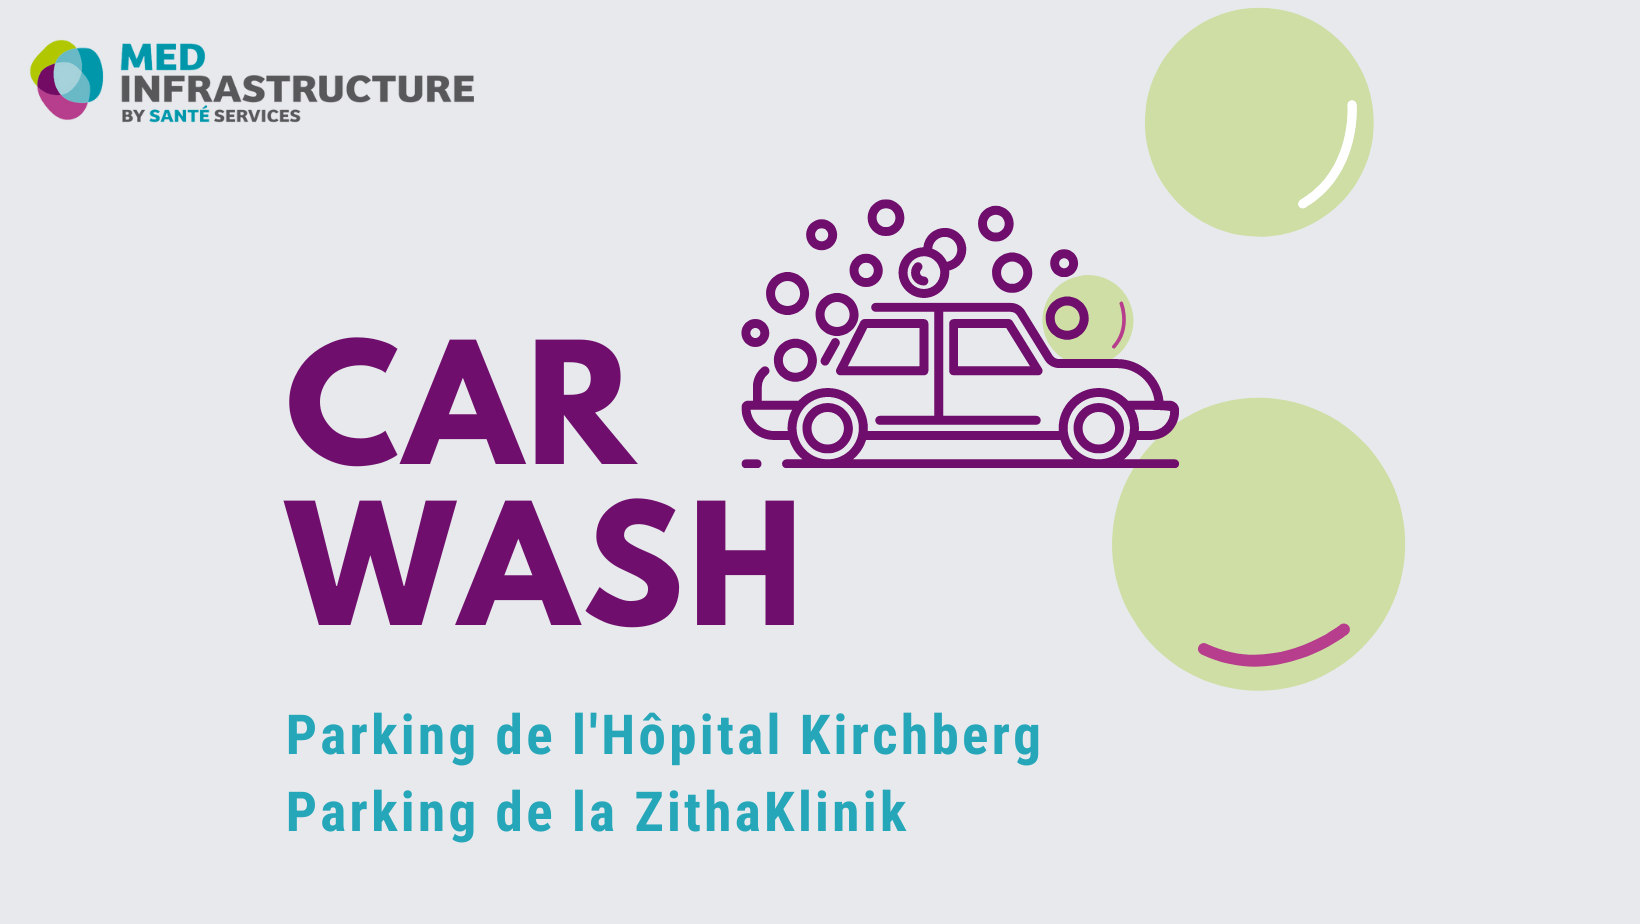 Important information - Car wash service